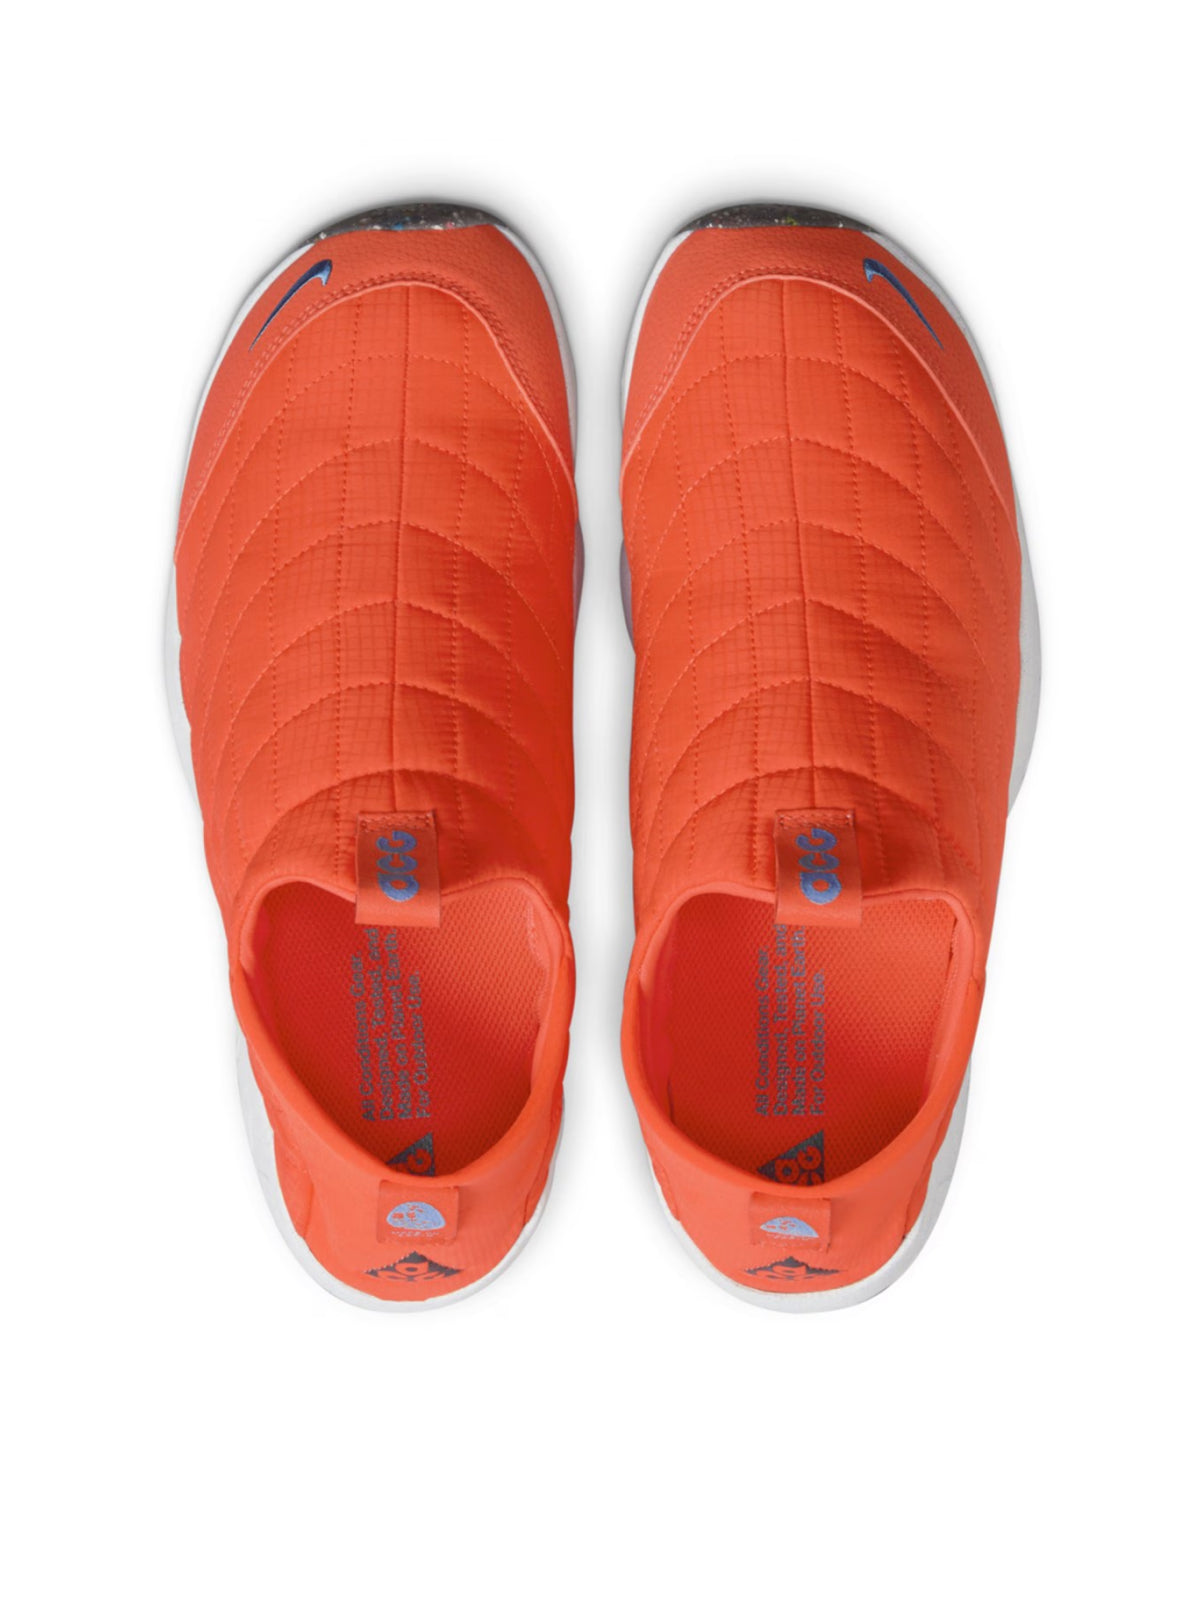 Nike-OUTLET-SALE-ACG Moc 3.5 Sneakers-ARCHIVIST